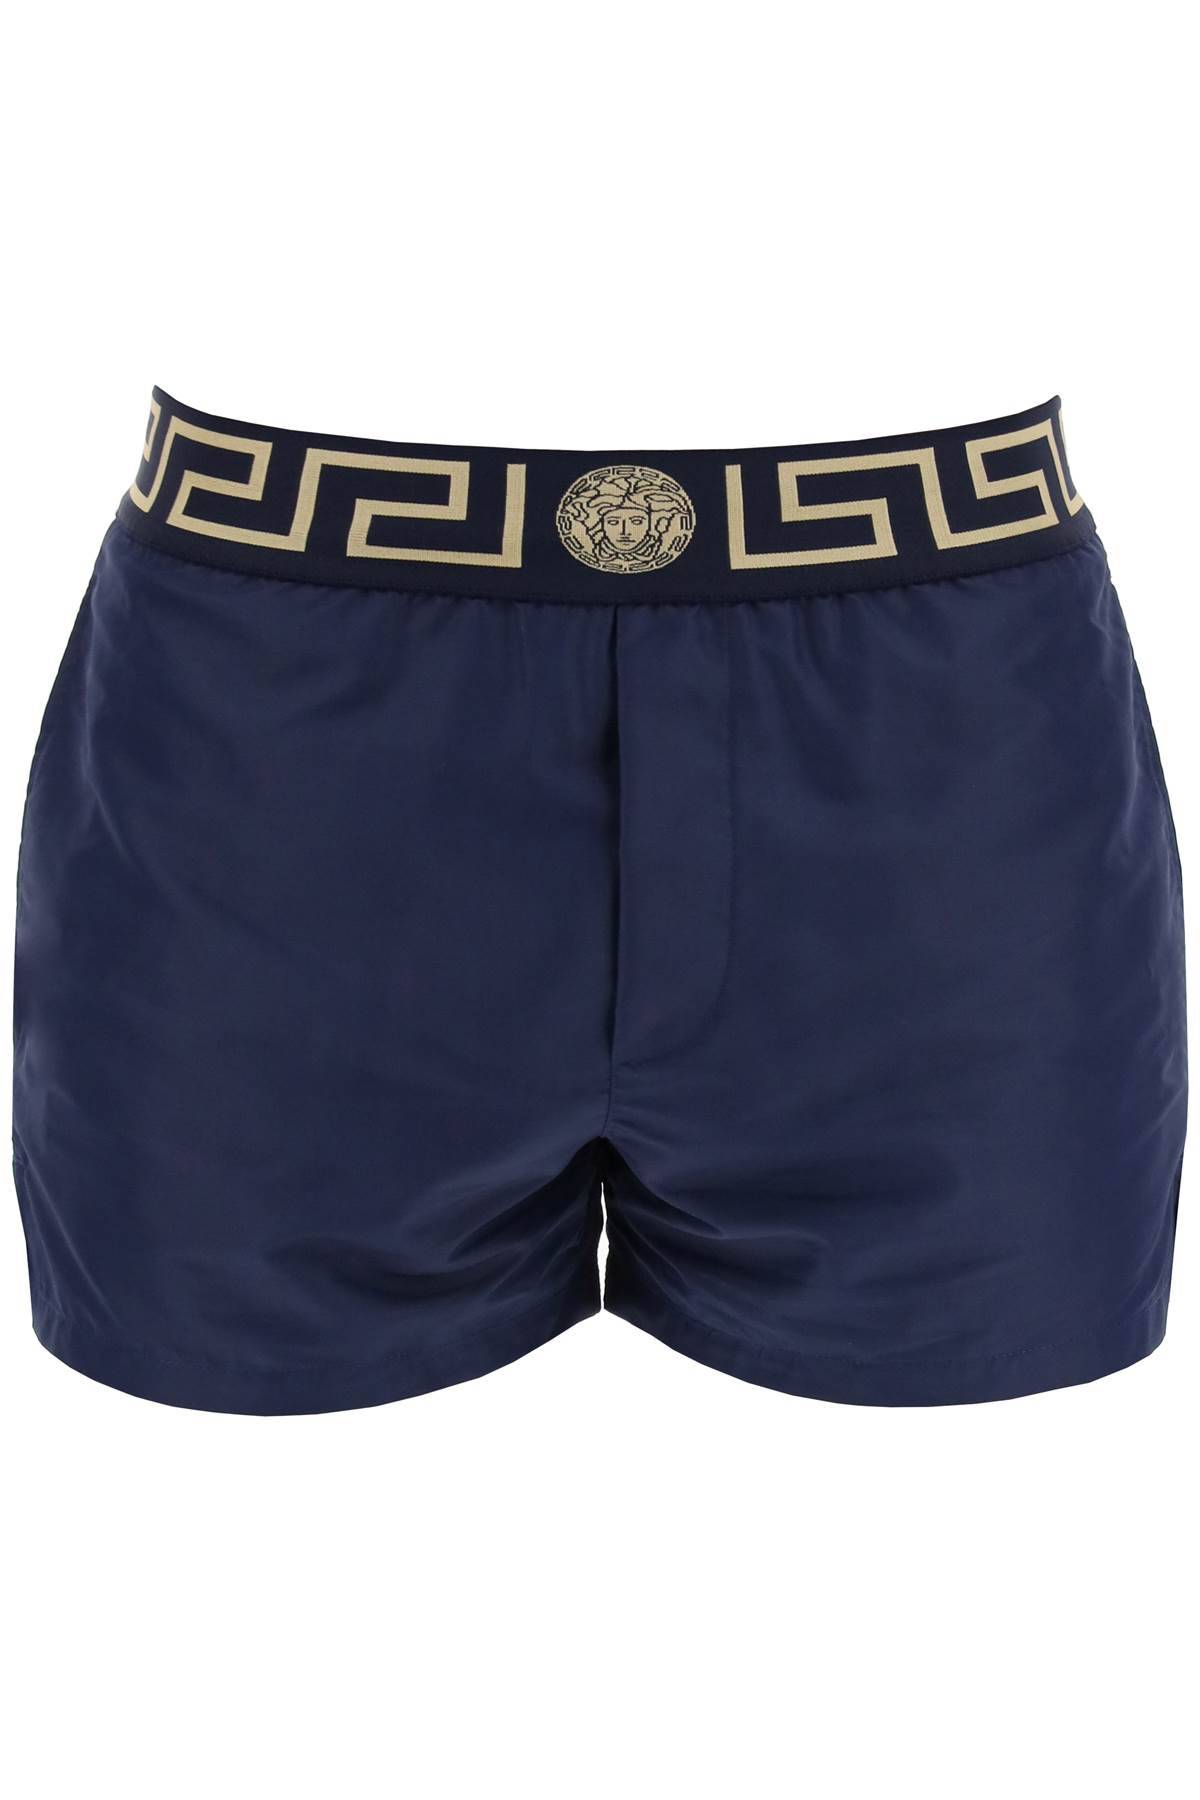 Versace VERSACE greek sea bermuda shorts for